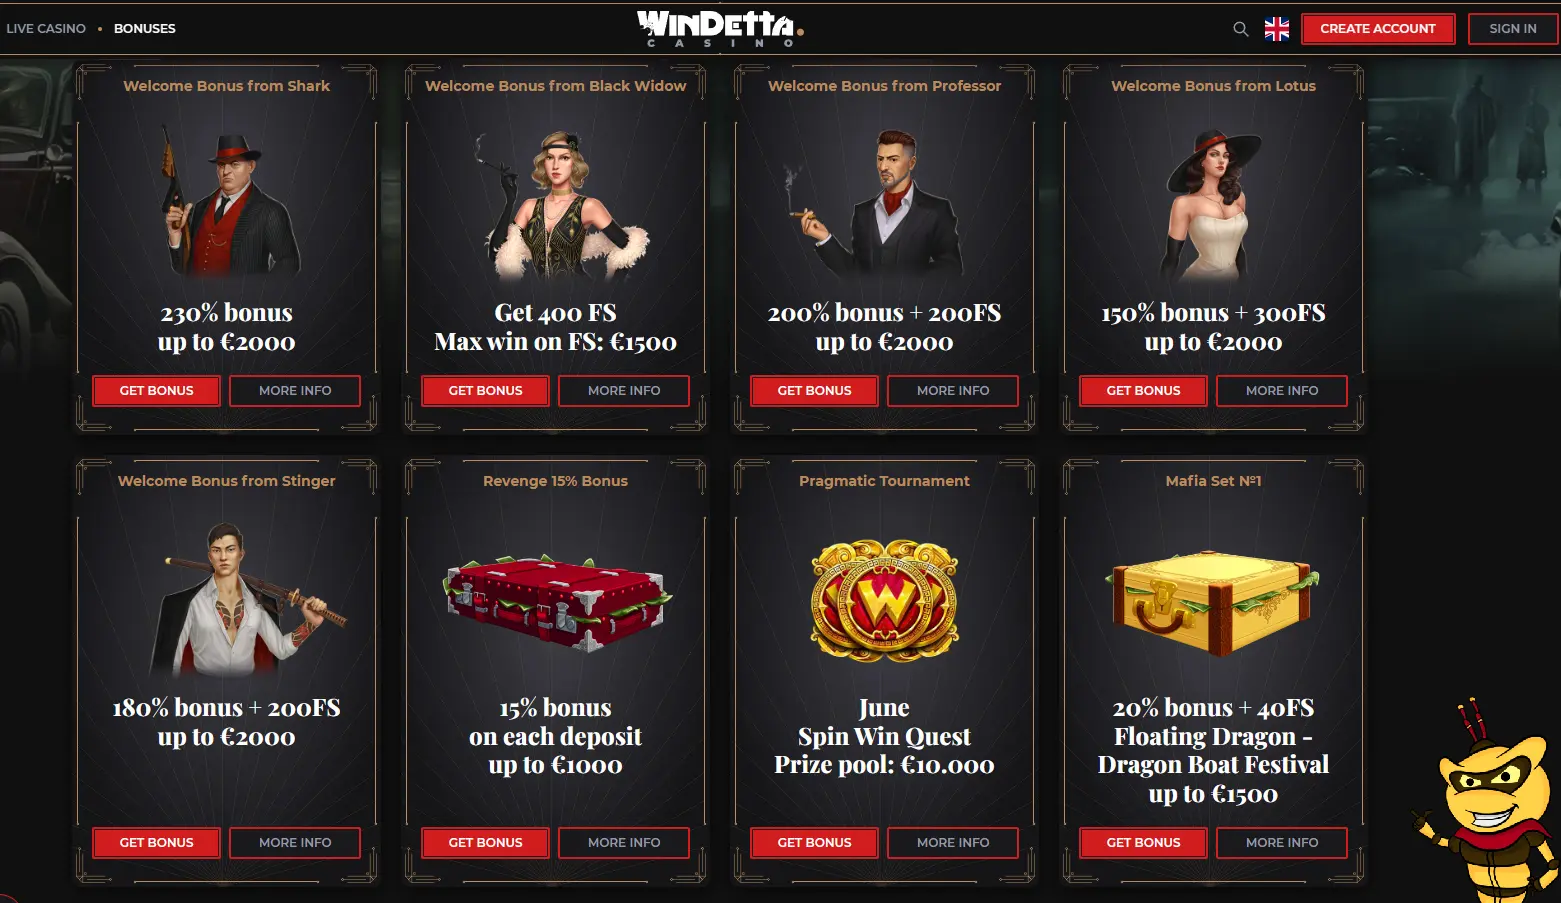 Windetta Casino Bonus Overview